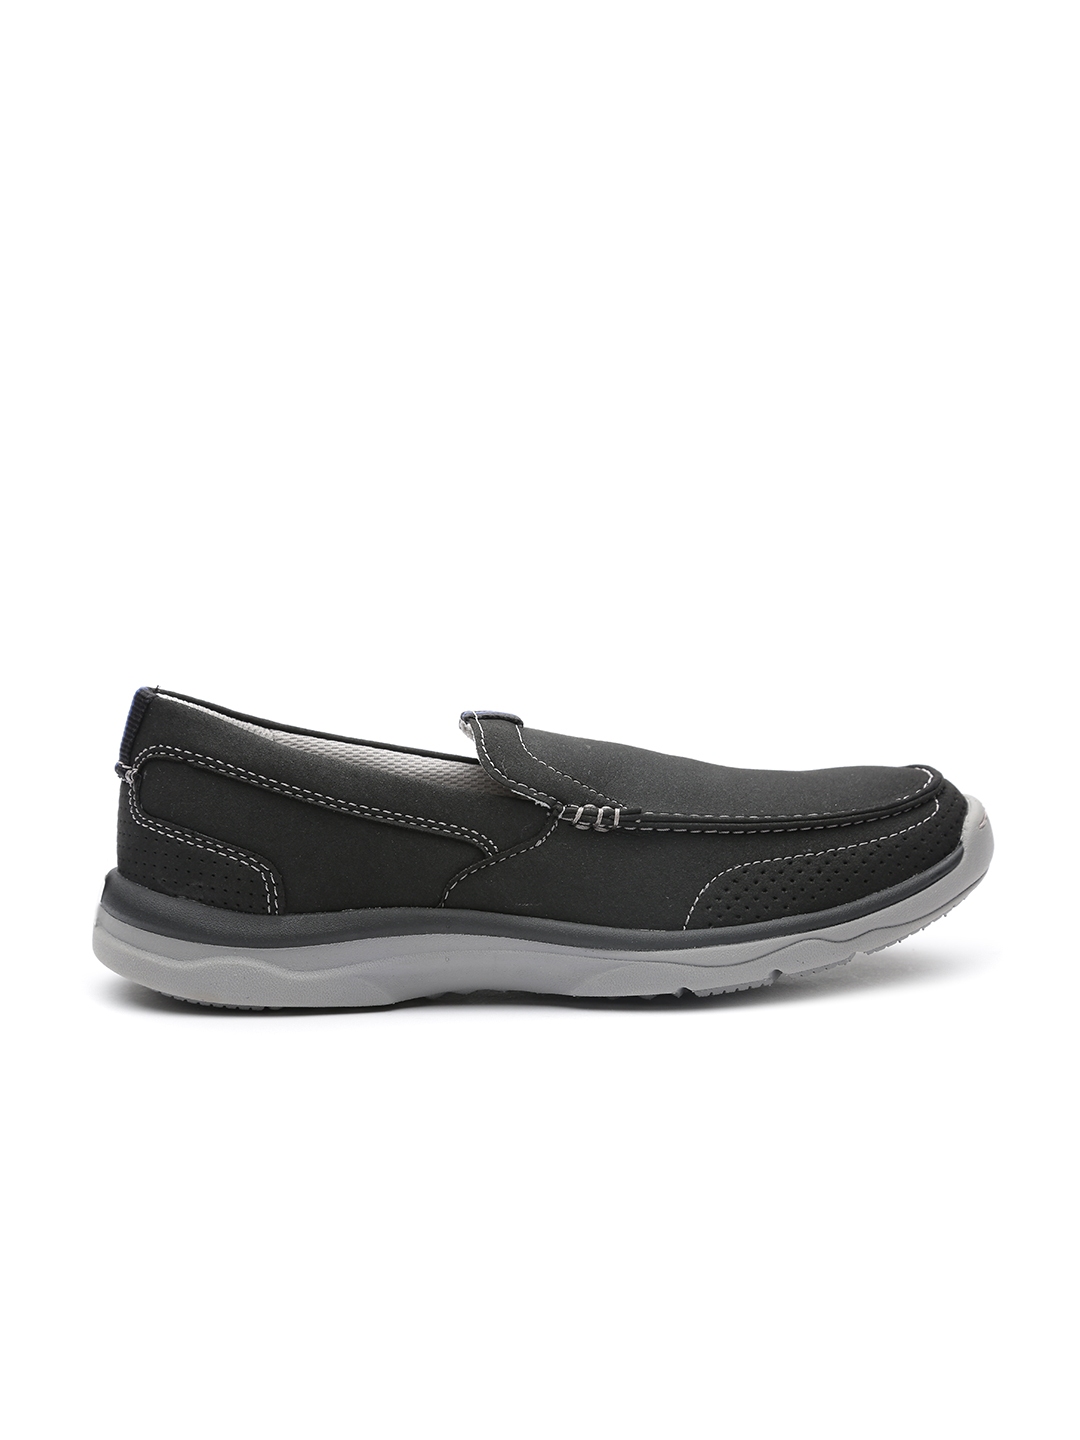 Buy Clarks Men Black Slip On Sneakers - Casual Shoes for Men 5618614 ...